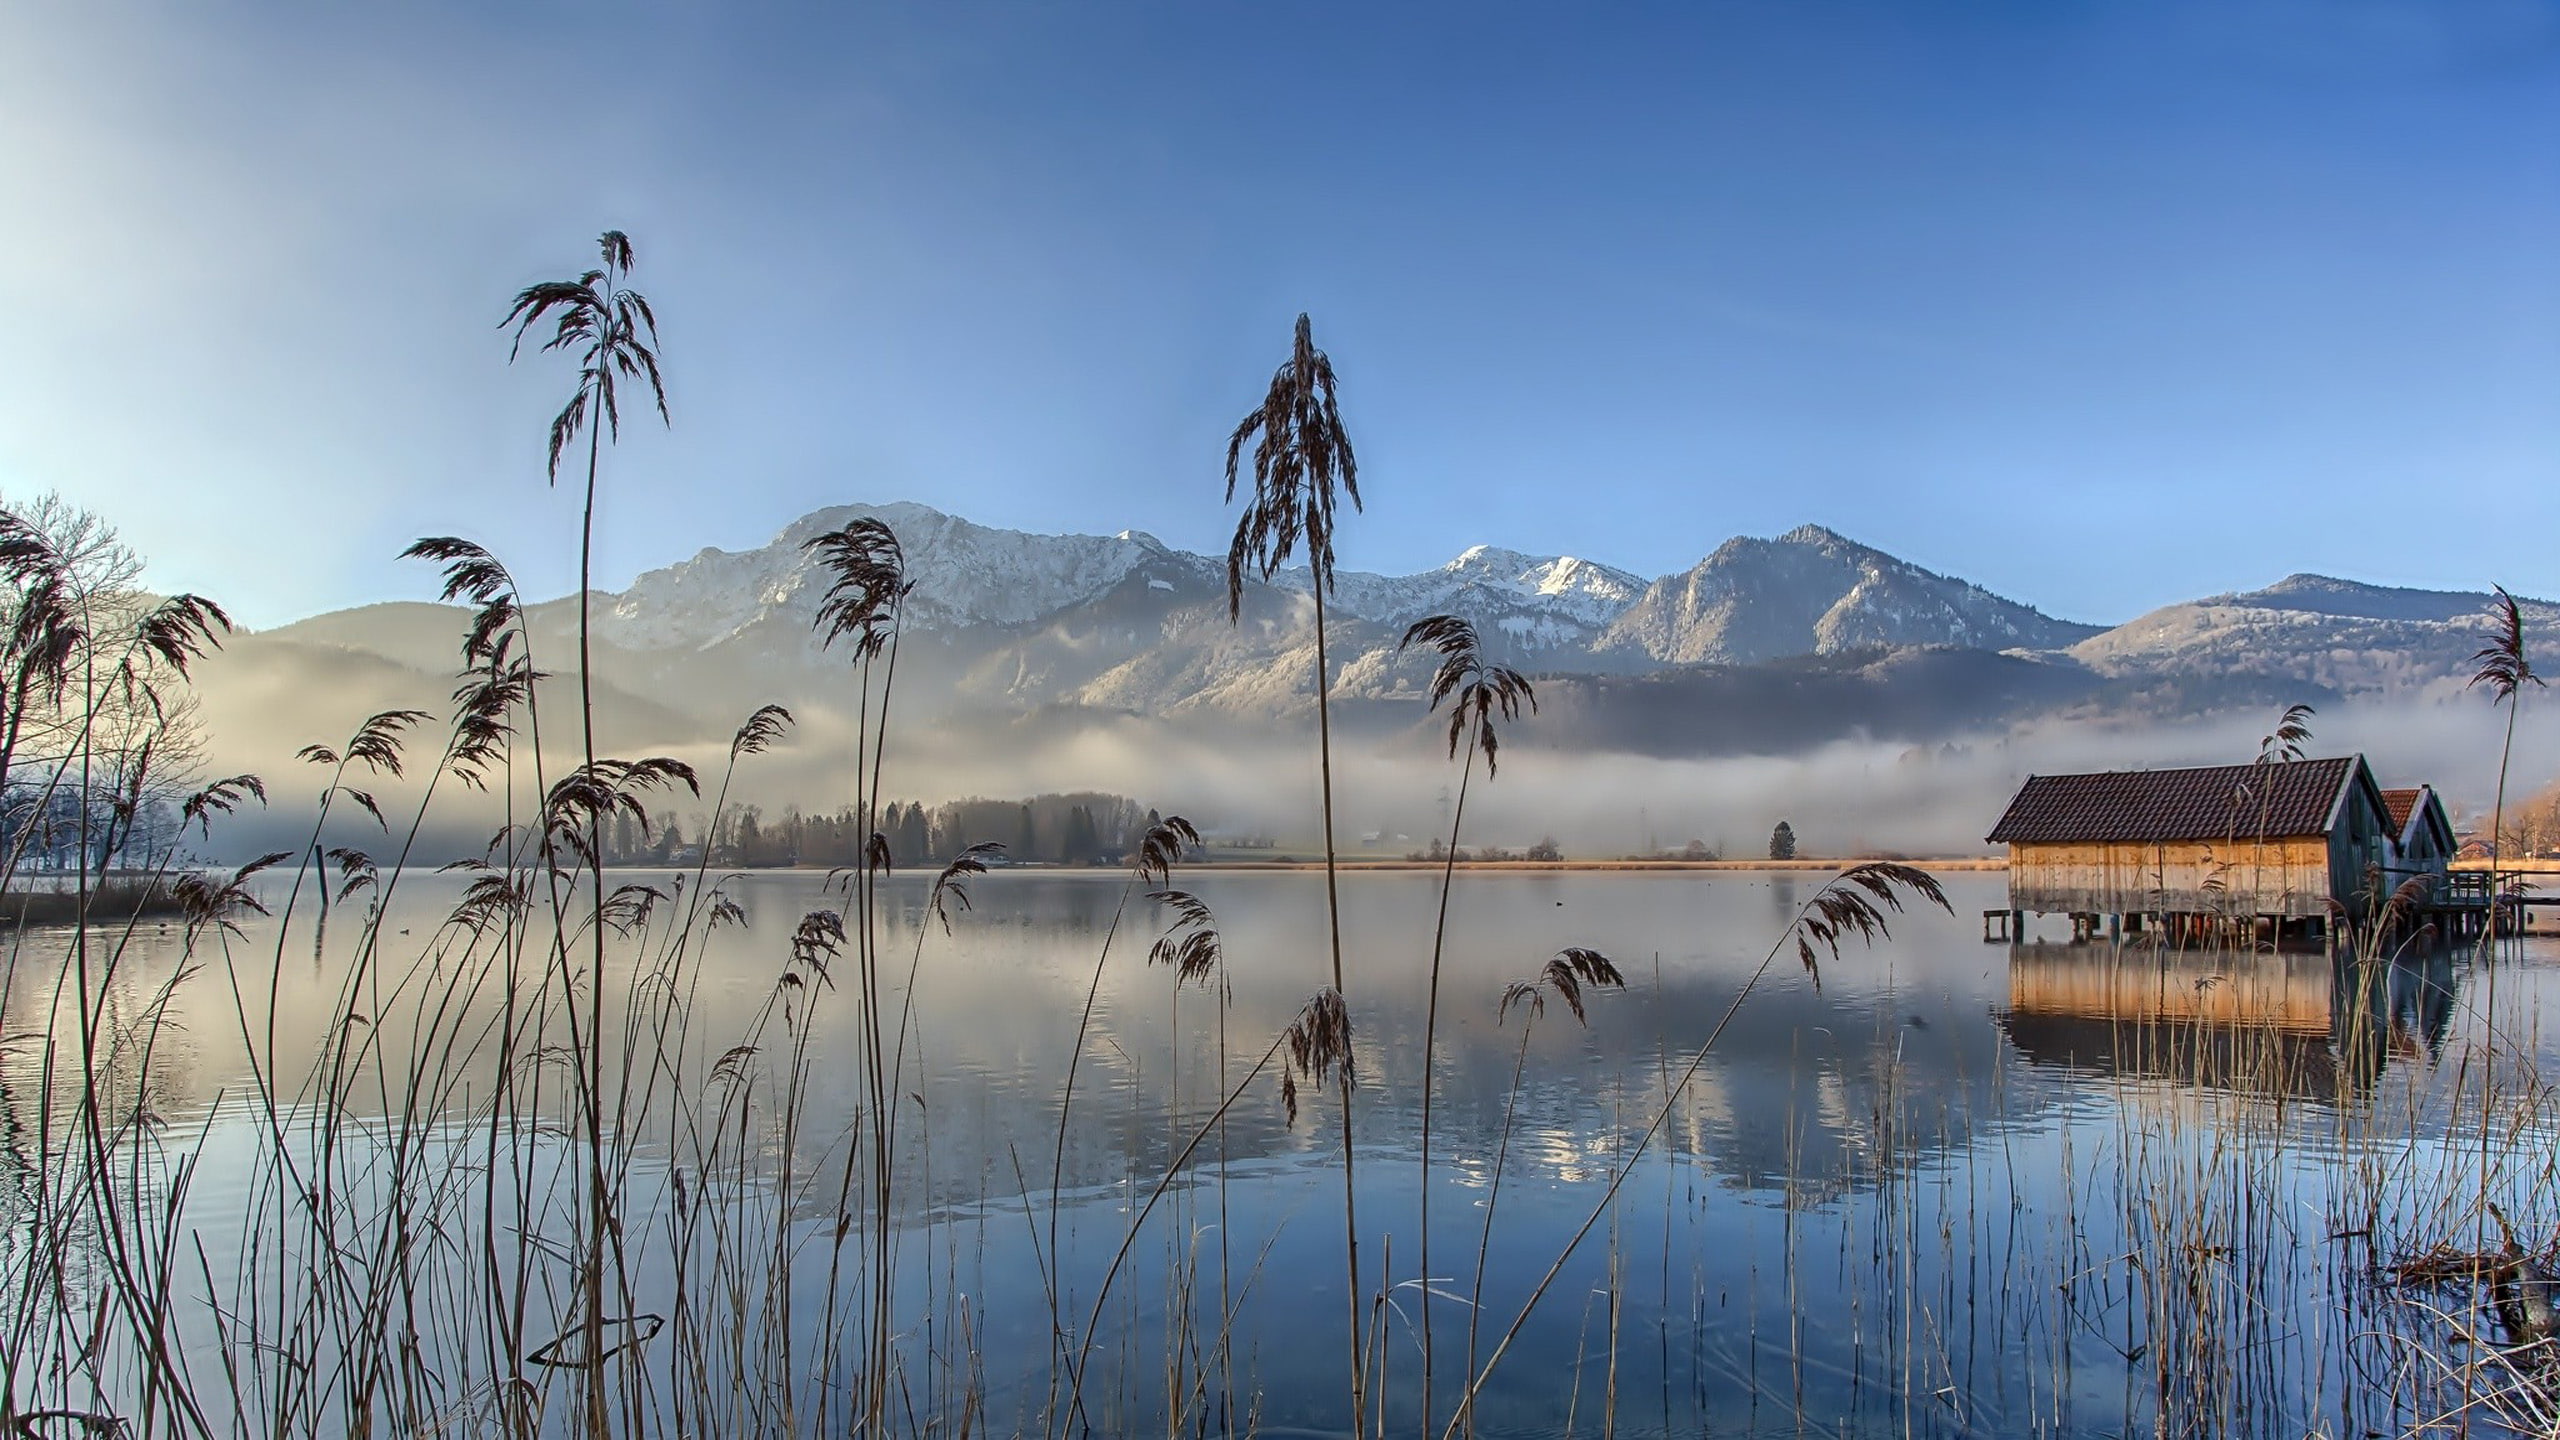 Lake Cane Reeds Wooden Fishing Houses Fog Evaporation Snowy Mountains Hd Desktop Wallpaper 2560×1440